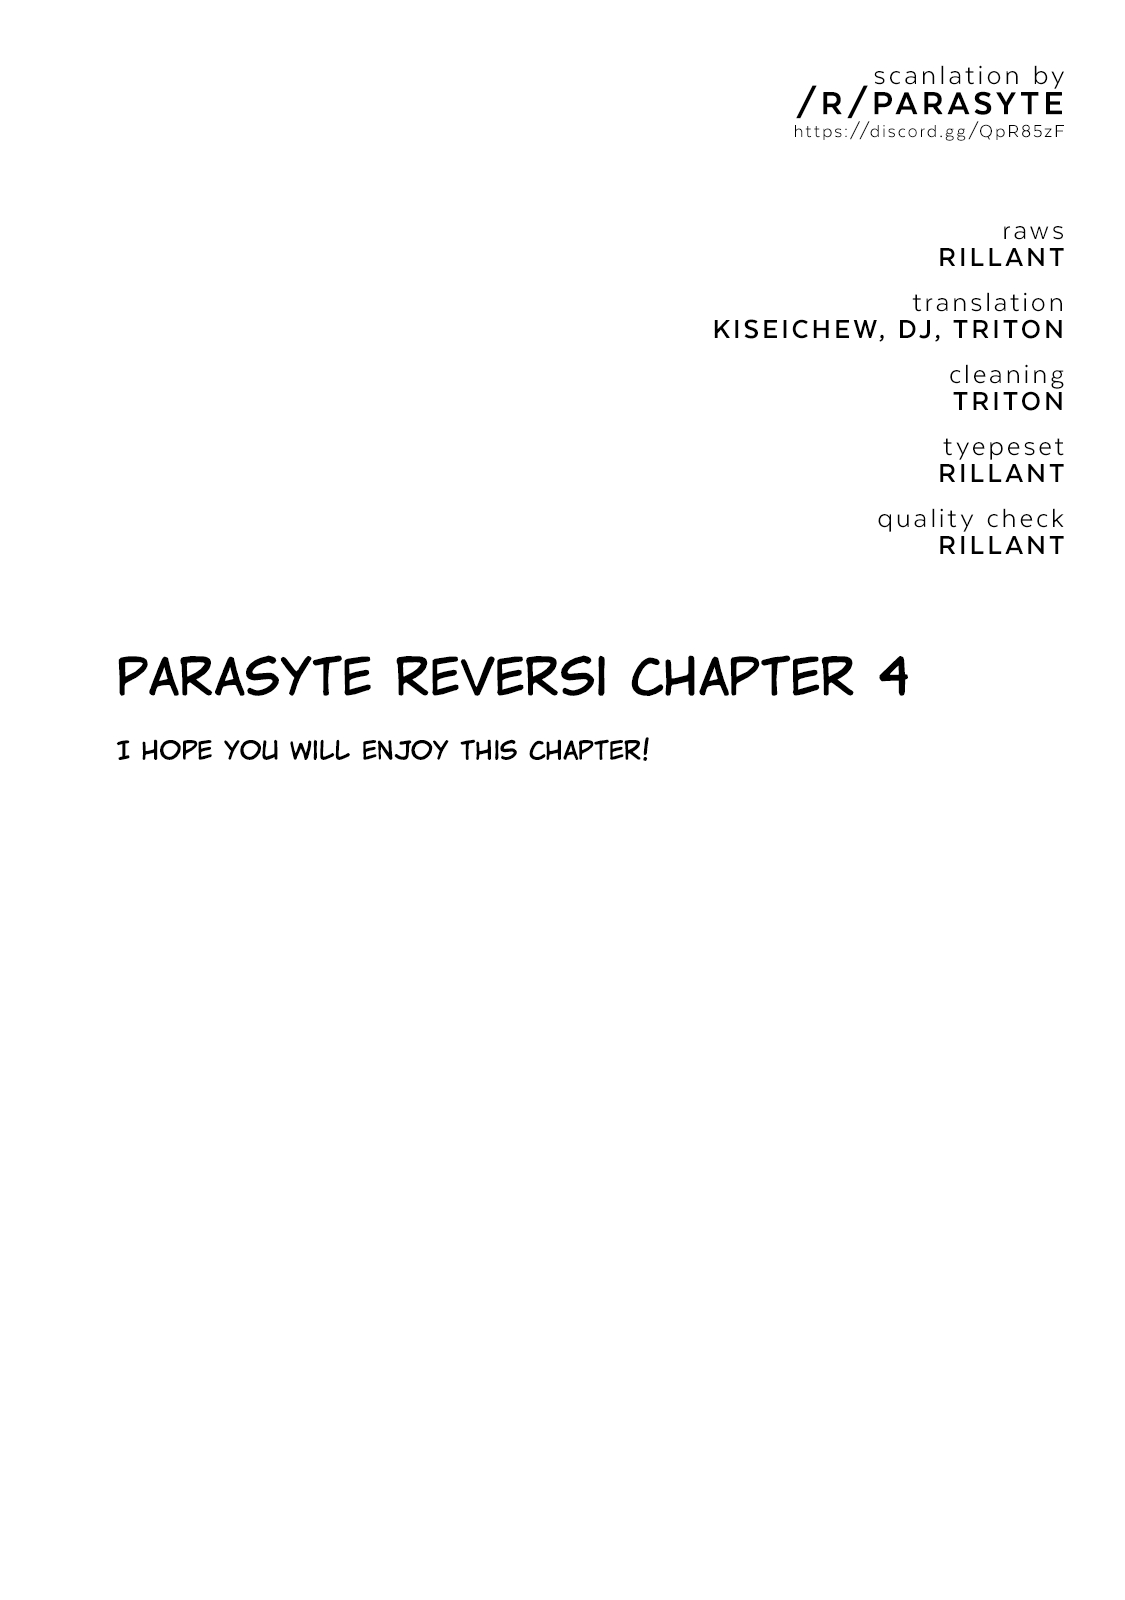 Parasyte Reversi Vol. 1 Ch. 4 Diablo II